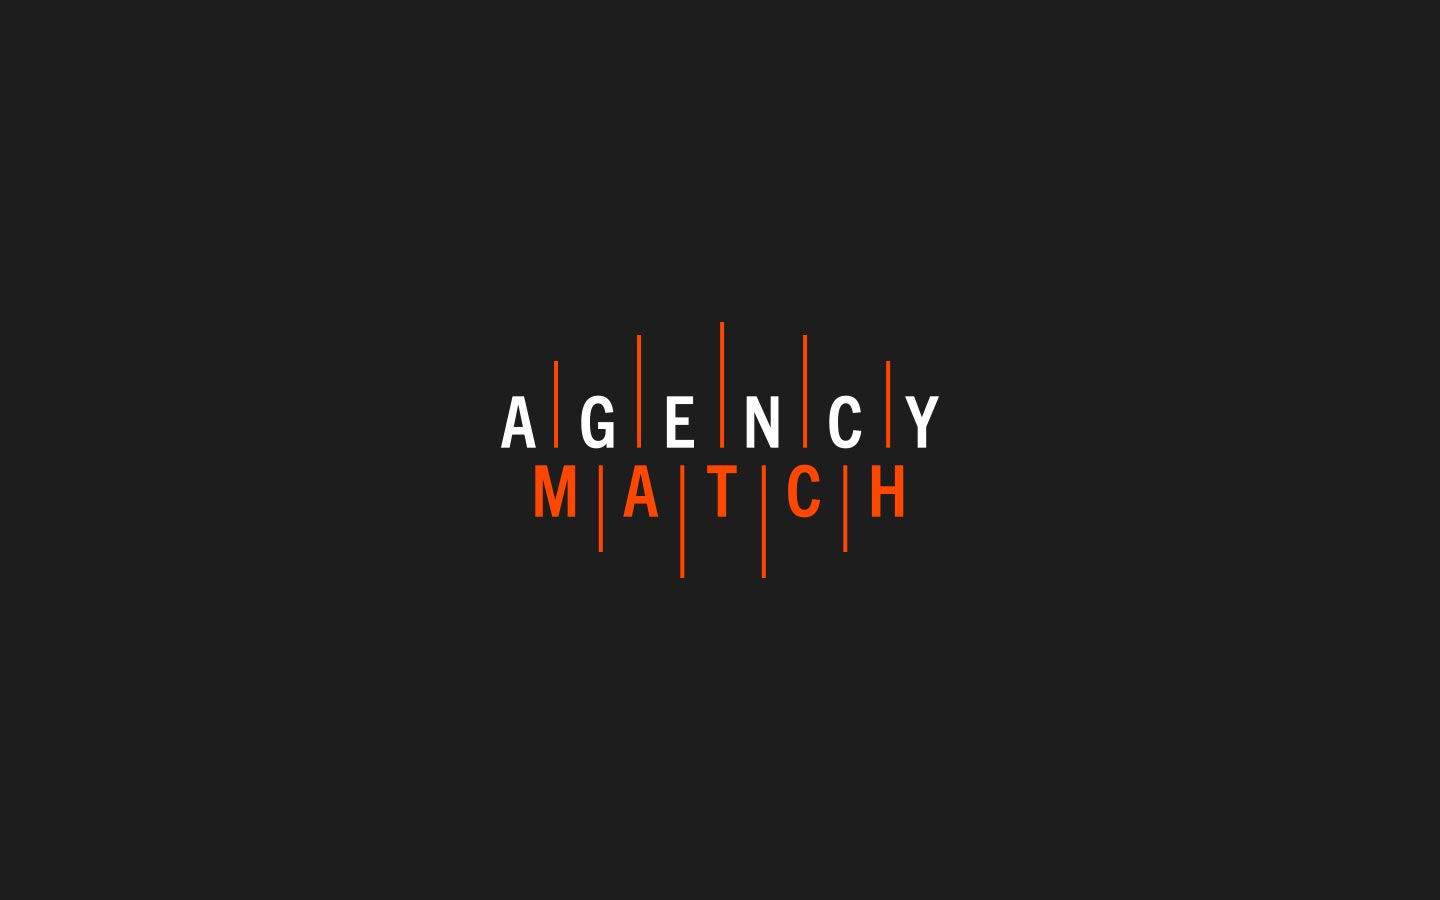 Agency match logo